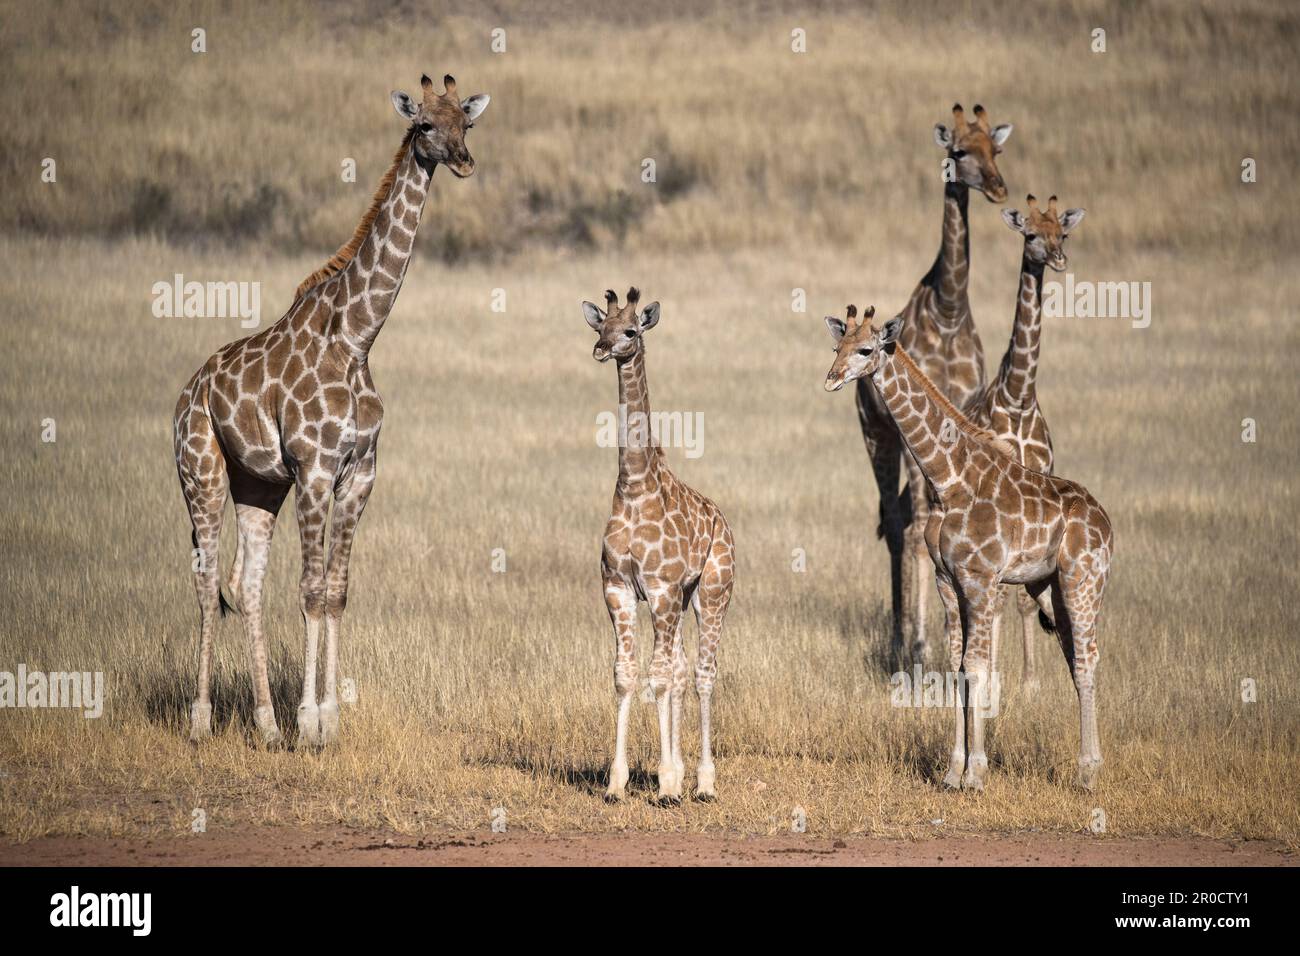 Girafes (Giraffa camelopardalis), parc transfrontier de Kgalagadi, Cap Nord, Afrique du Sud Banque D'Images